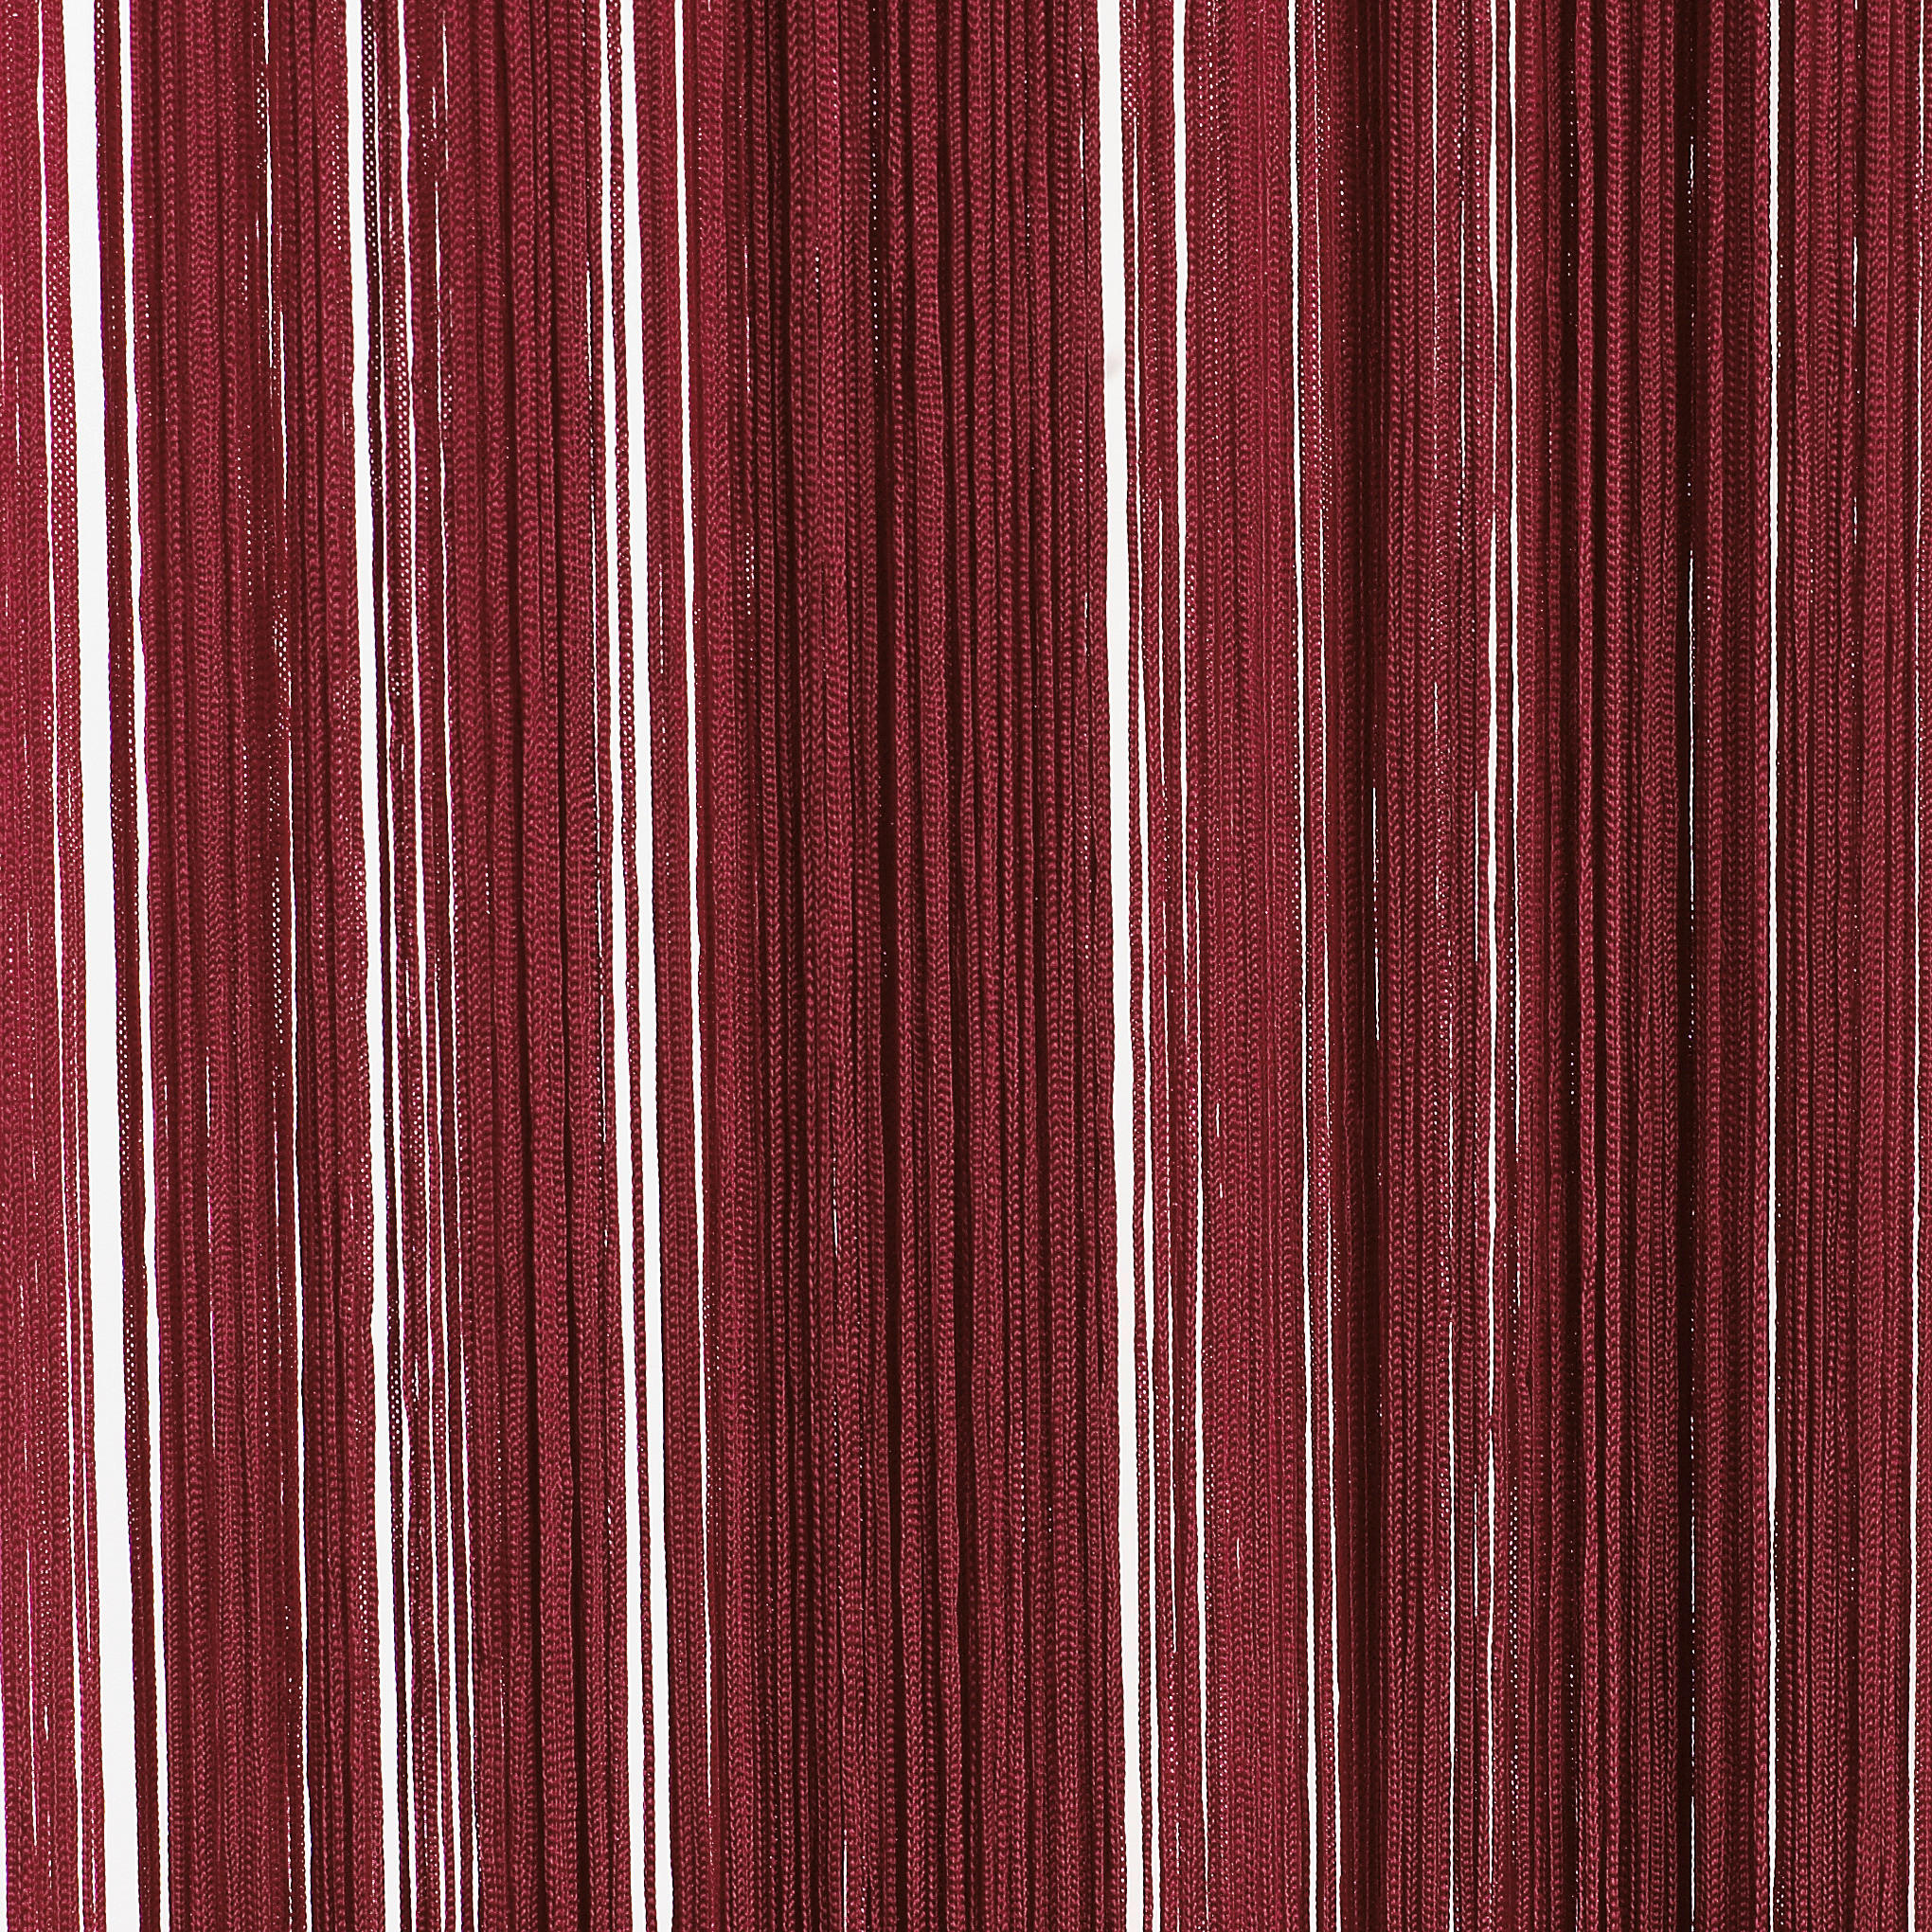 NITASTA ZAVESA UNI, RDEČA  prosojno   90/245 cm  - rdeča, Konvencionalno, tekstil (90/245cm) - Boxxx